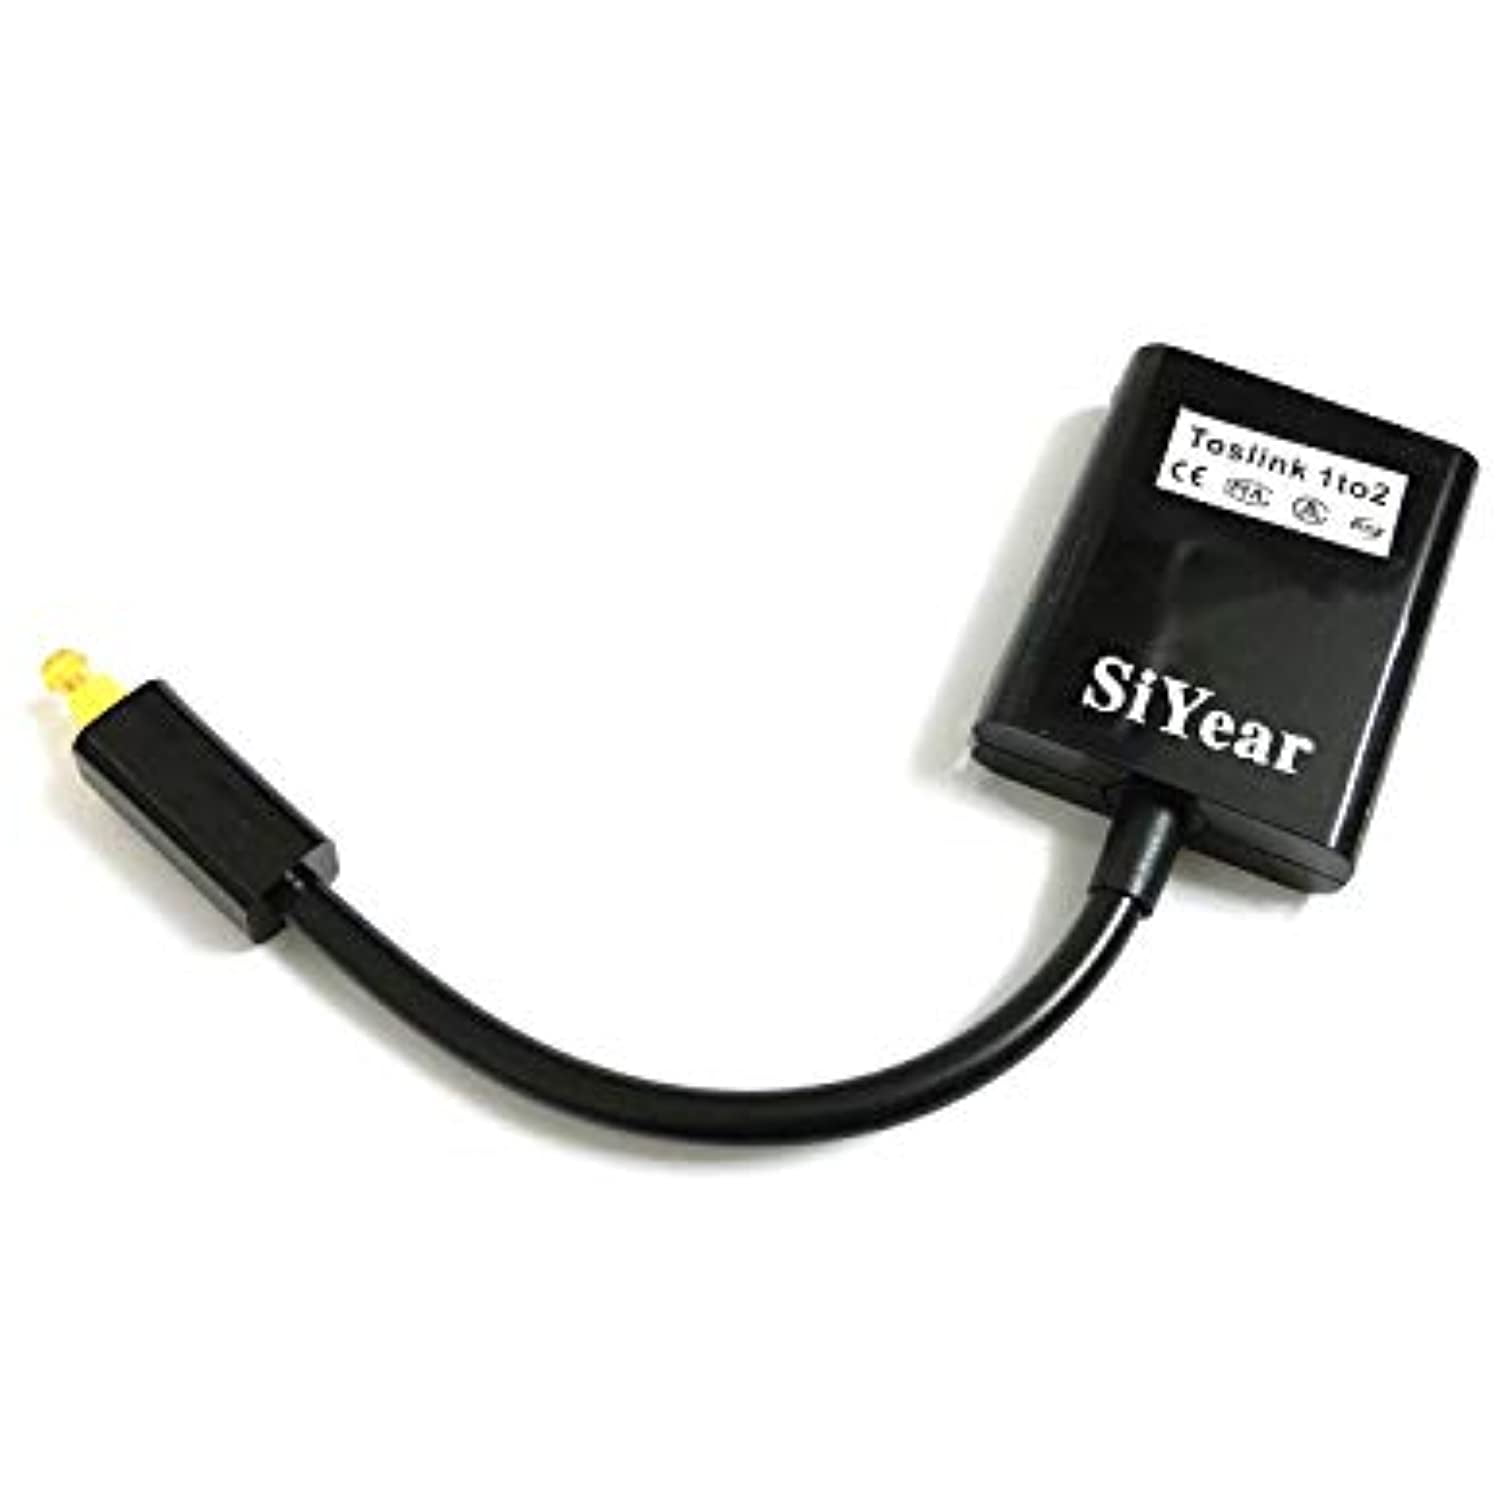 SiYear 1 in 2 Out Digital Toshlink Fiber Audio Optical Splitter Cable ，Fiber Optic Adapter，Fiber Converter 0.2M Audio Adapter Cable 